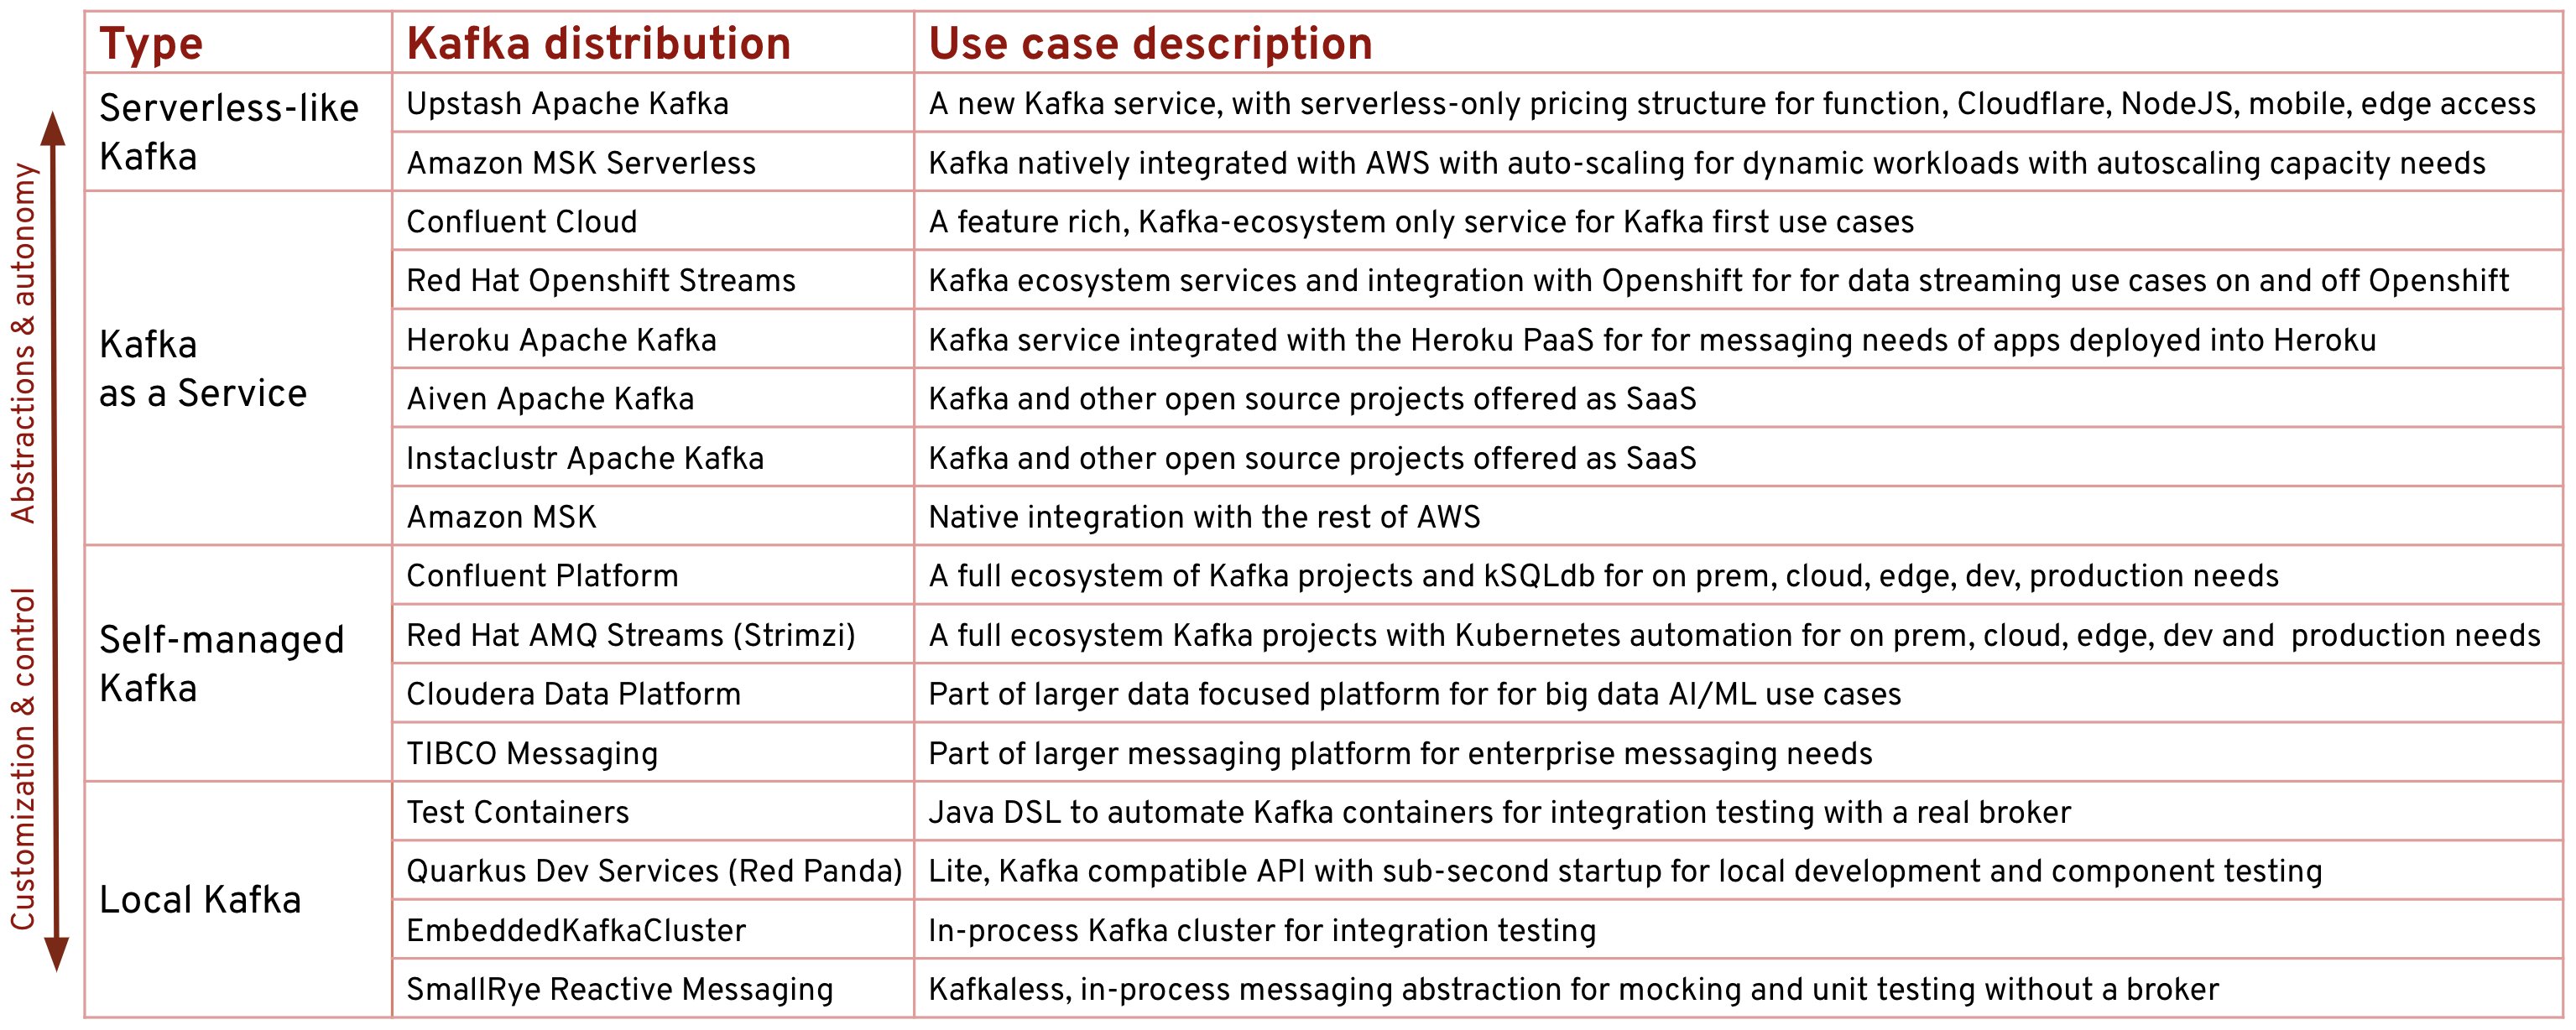 List of Apache Kafka distributions and use cases